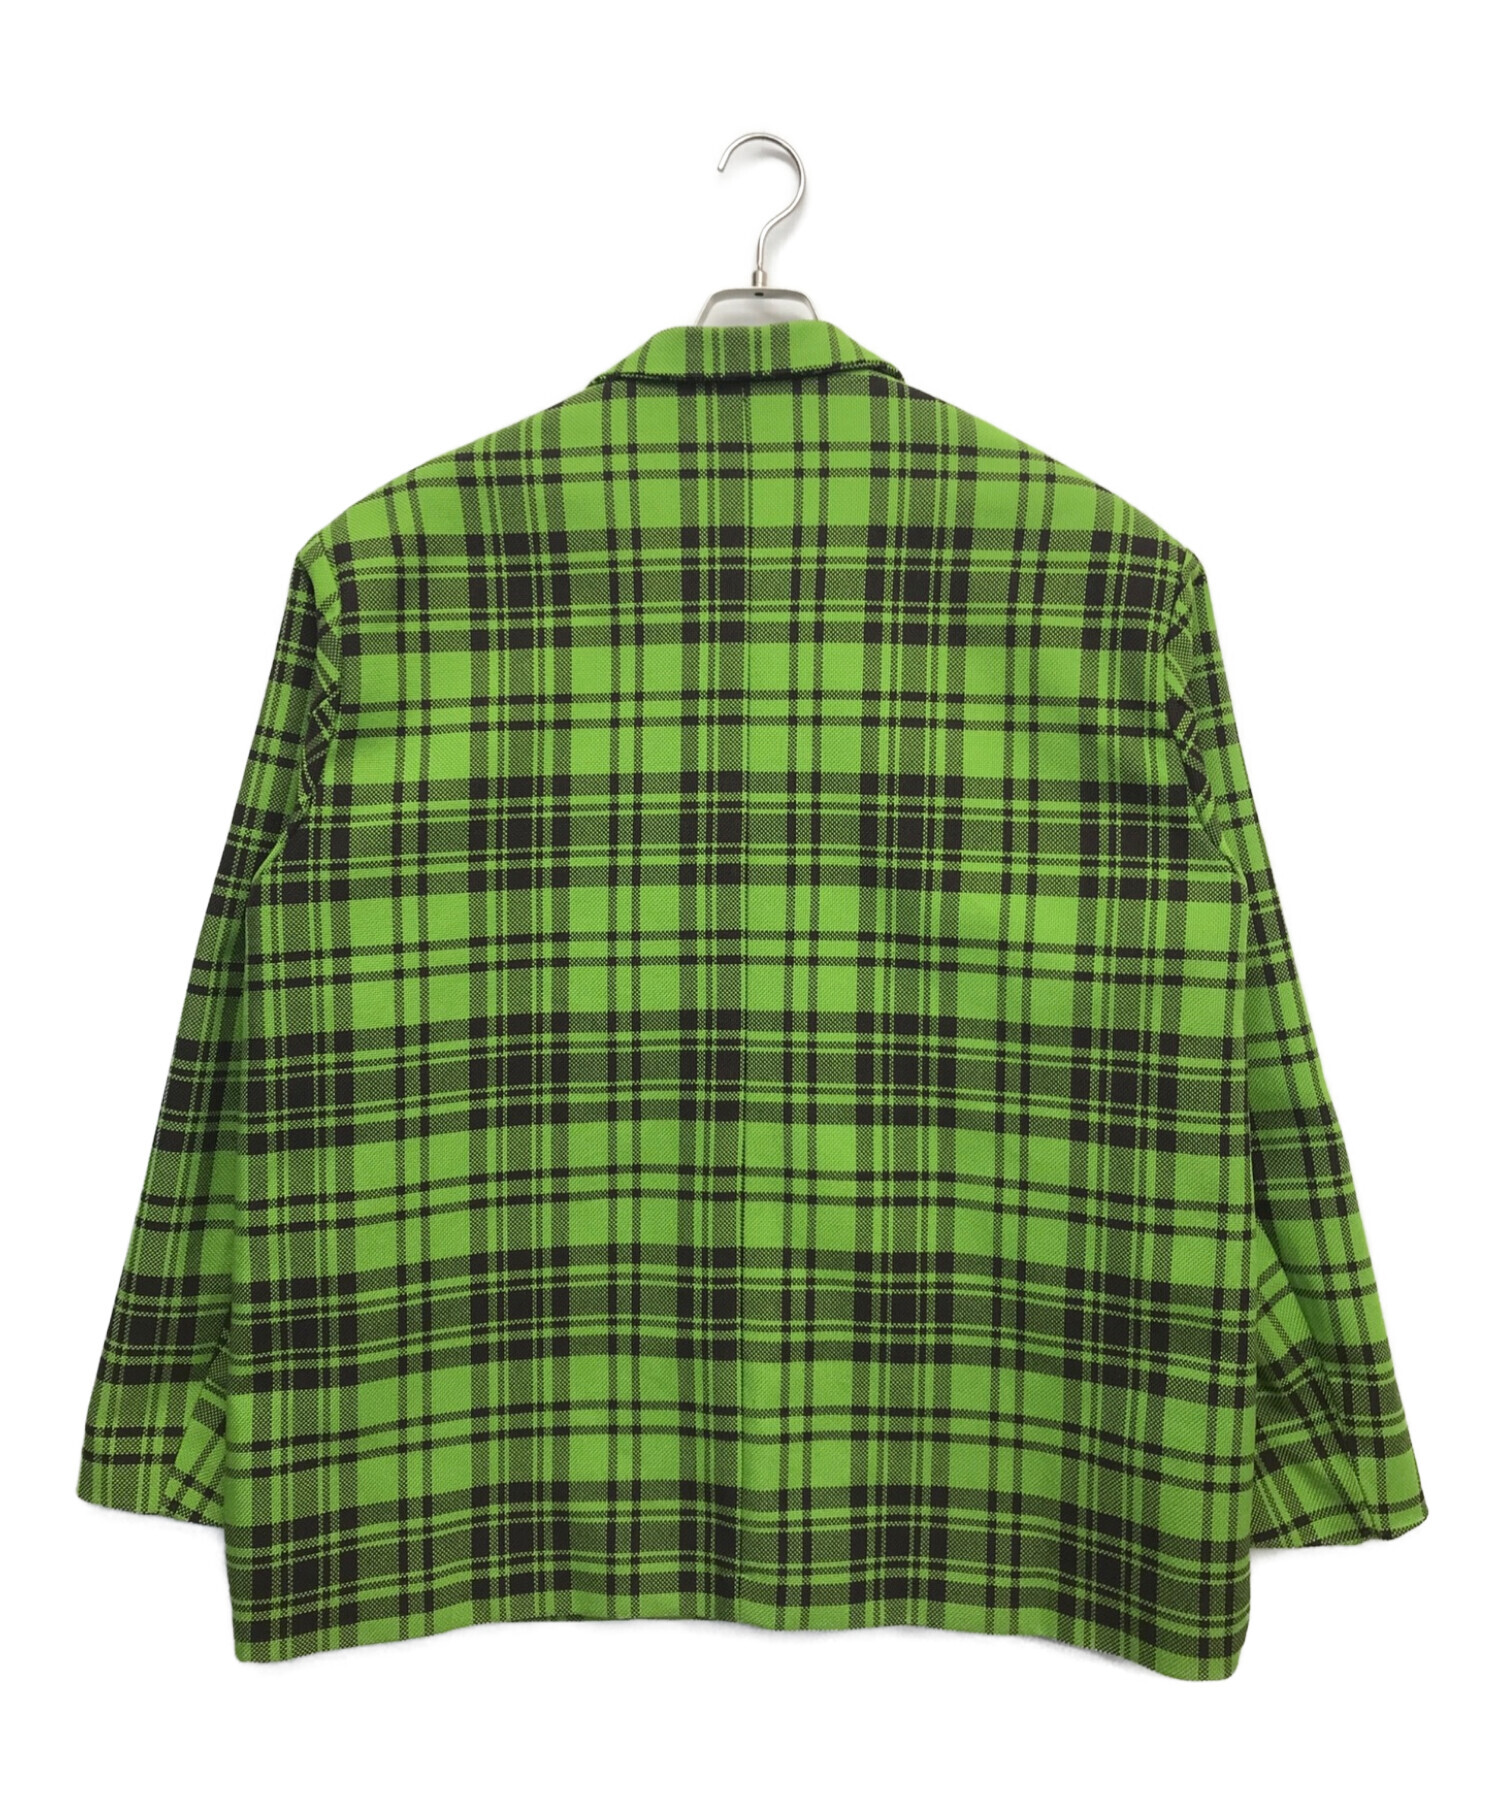 YOIKADAKADA (ヨイカダカダ) セットアップ テーラードジャケット グリーン サイズ:L